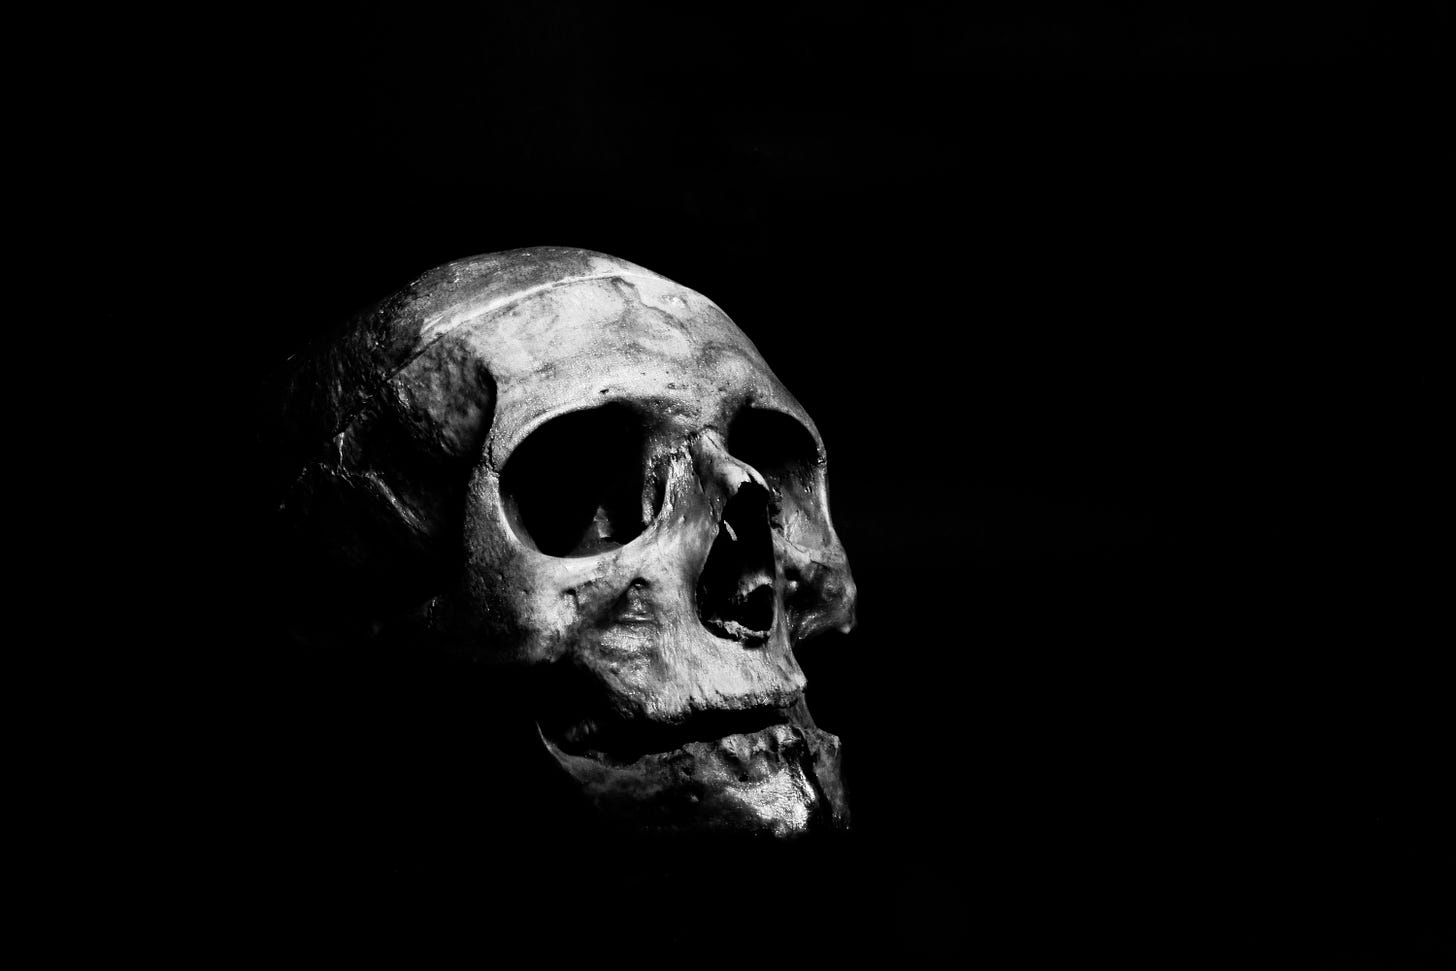 Black & white moody photo of a skull against a dense black background